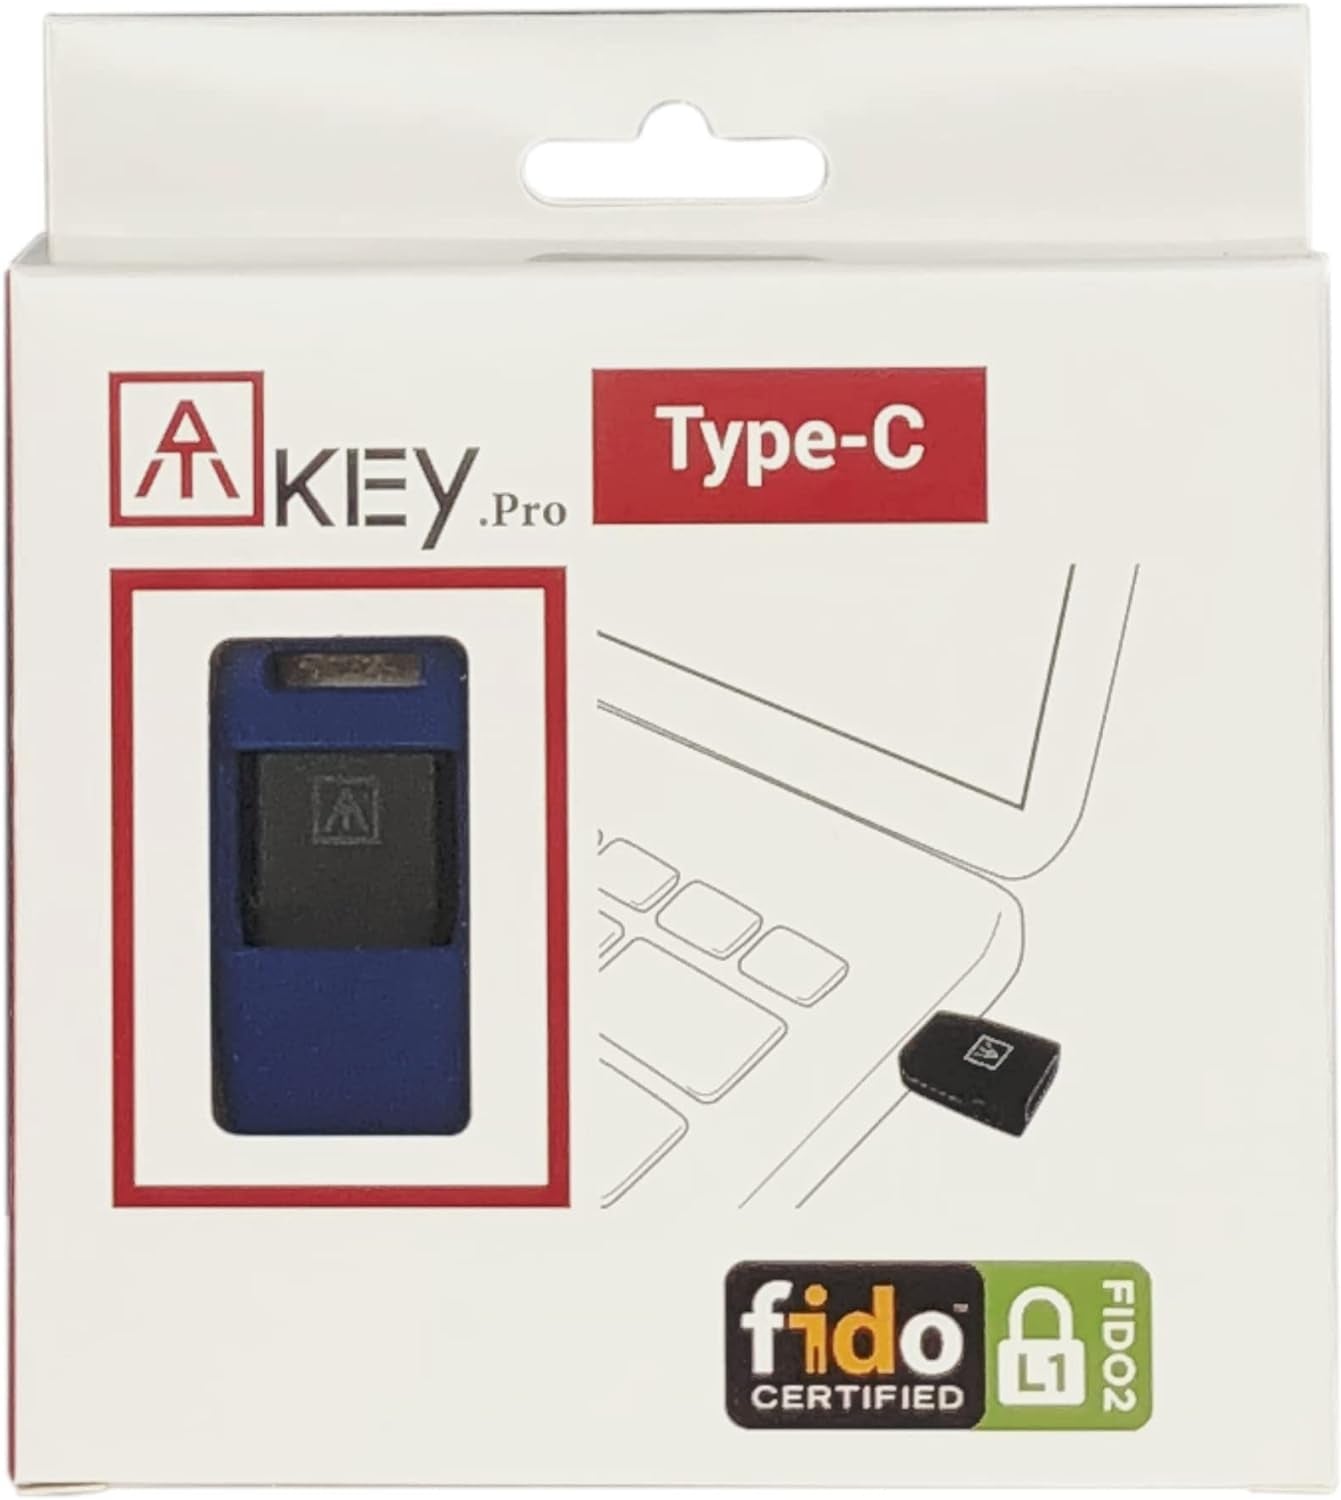 Atkey.Pro - FIDO2 Certified Security Key, USB Fingerprint Authentication USB-C Ports, Protect Online Accounts : Windows, Linux, Mac OS, Google, Bank of America, Facebook, Twitter, Apple